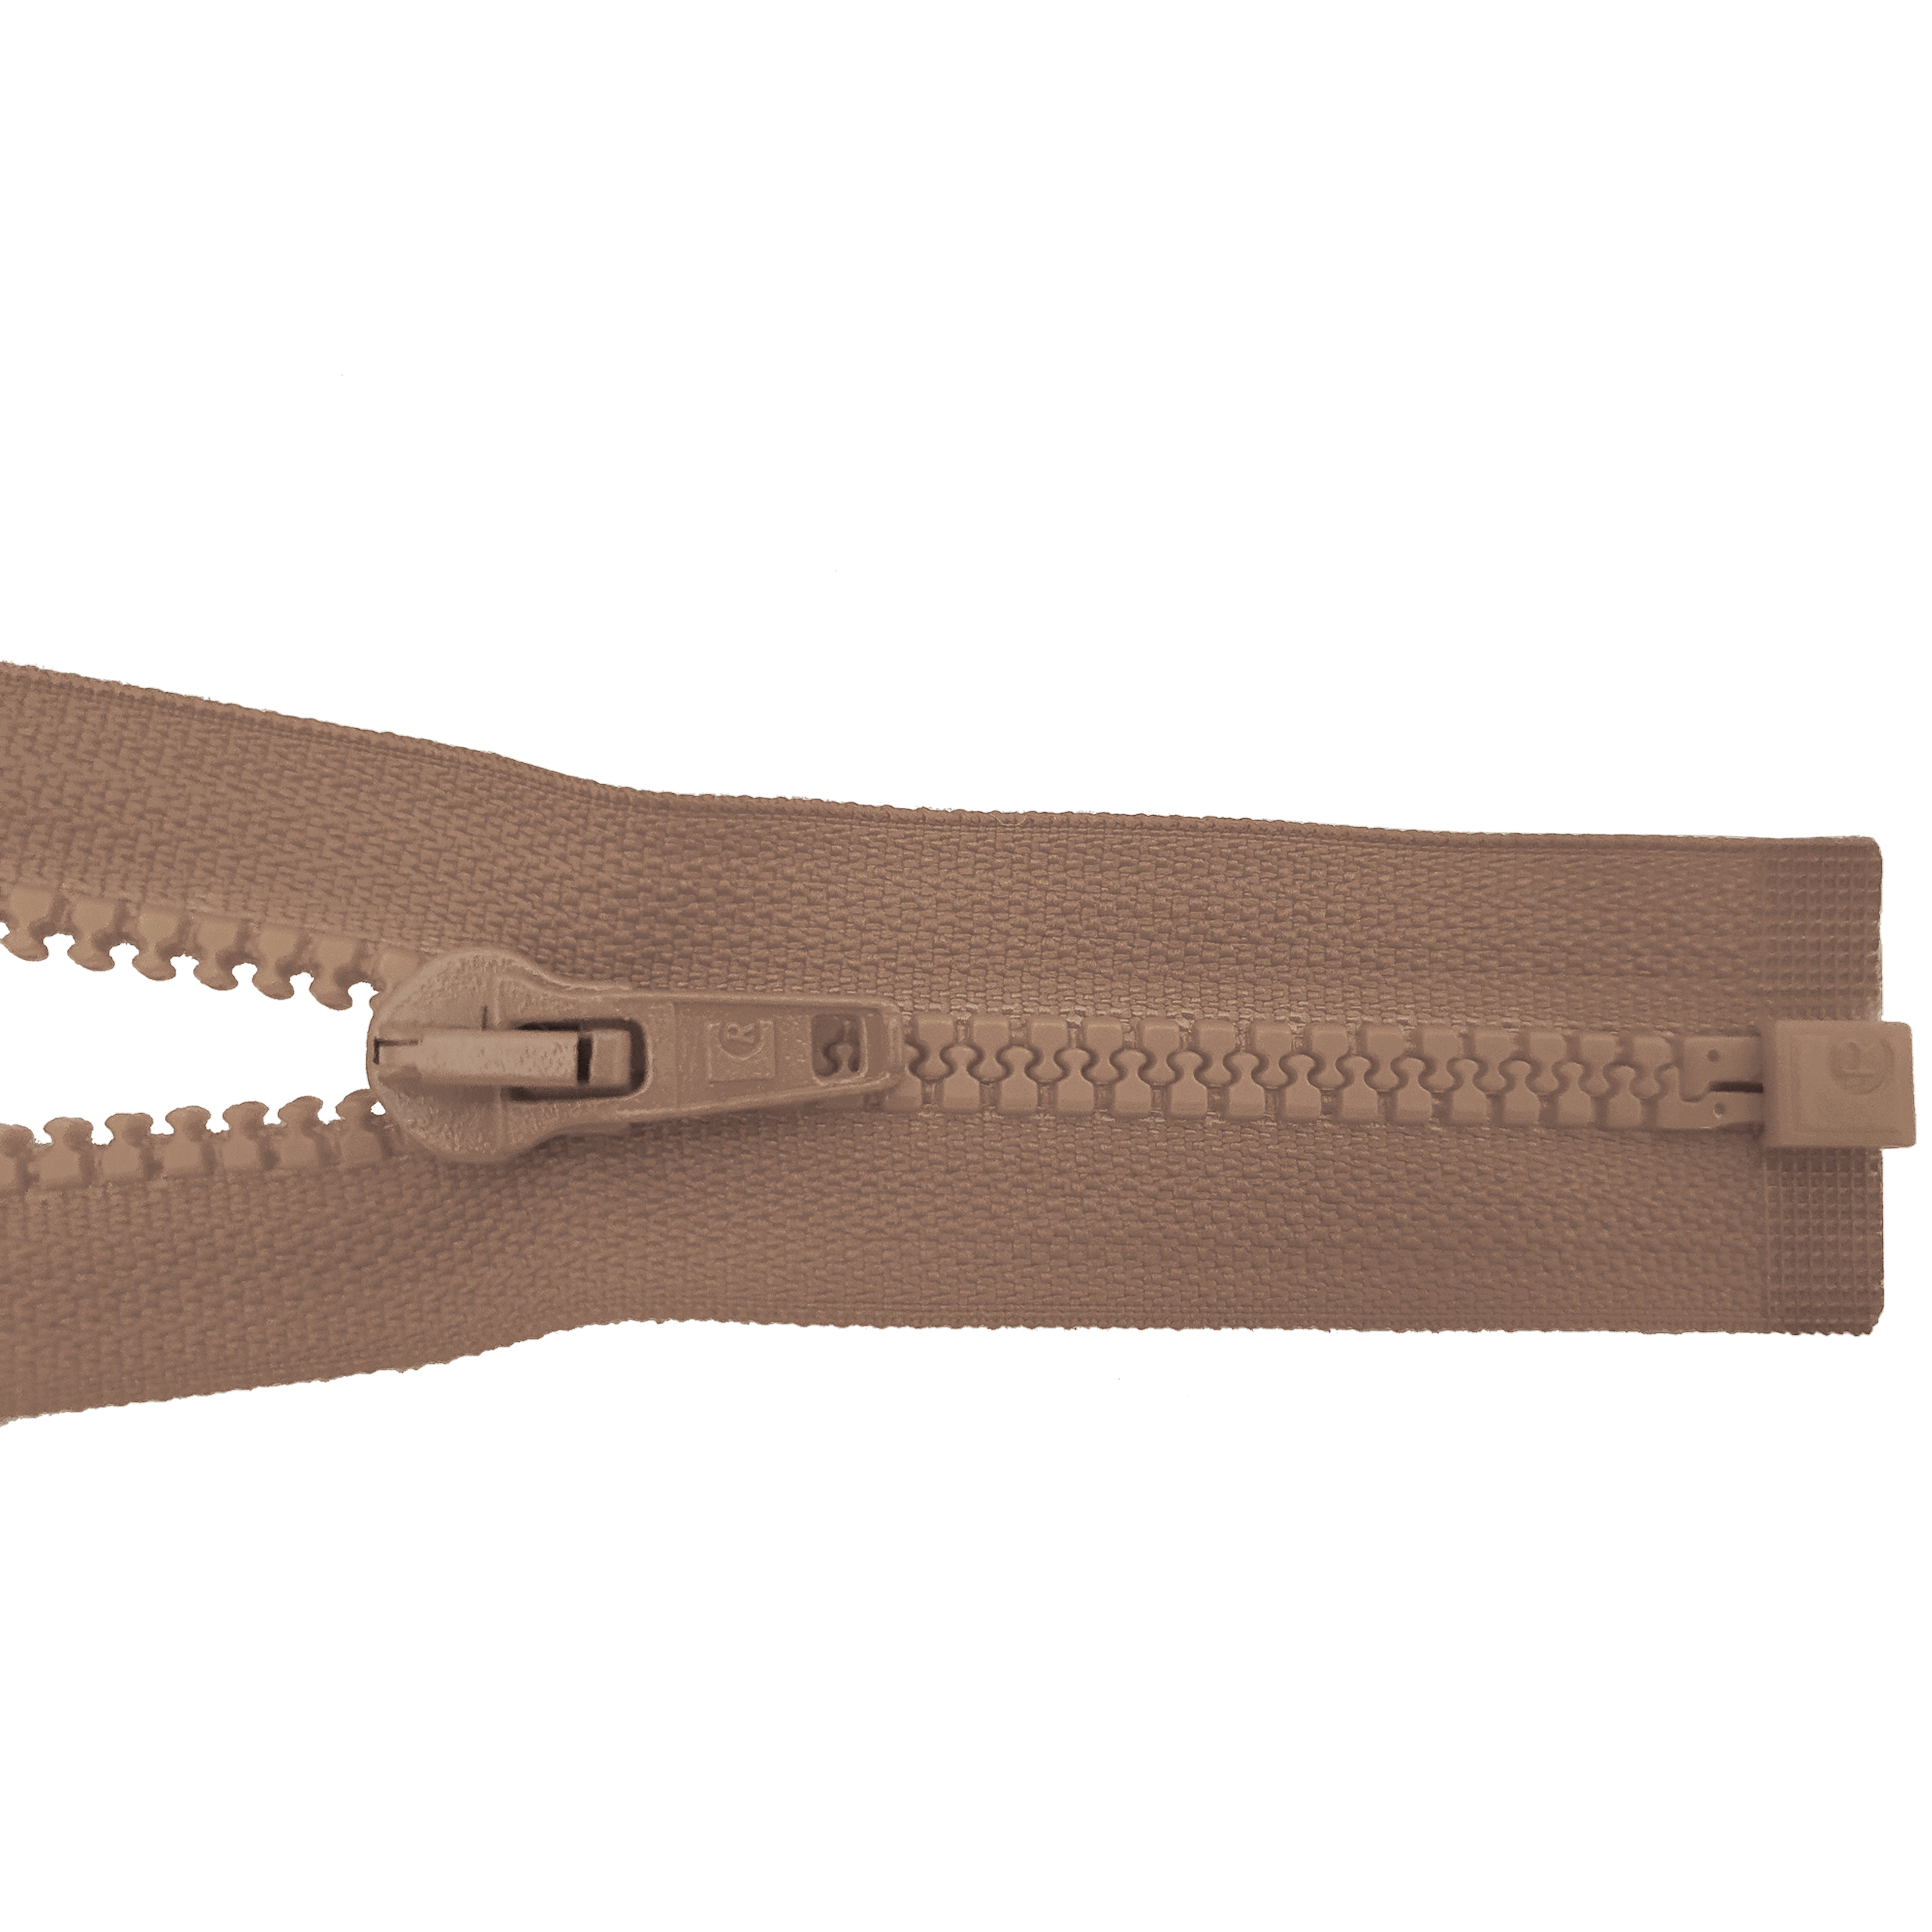 zipper 80cm,divisible, molded plastic, wide, light brown